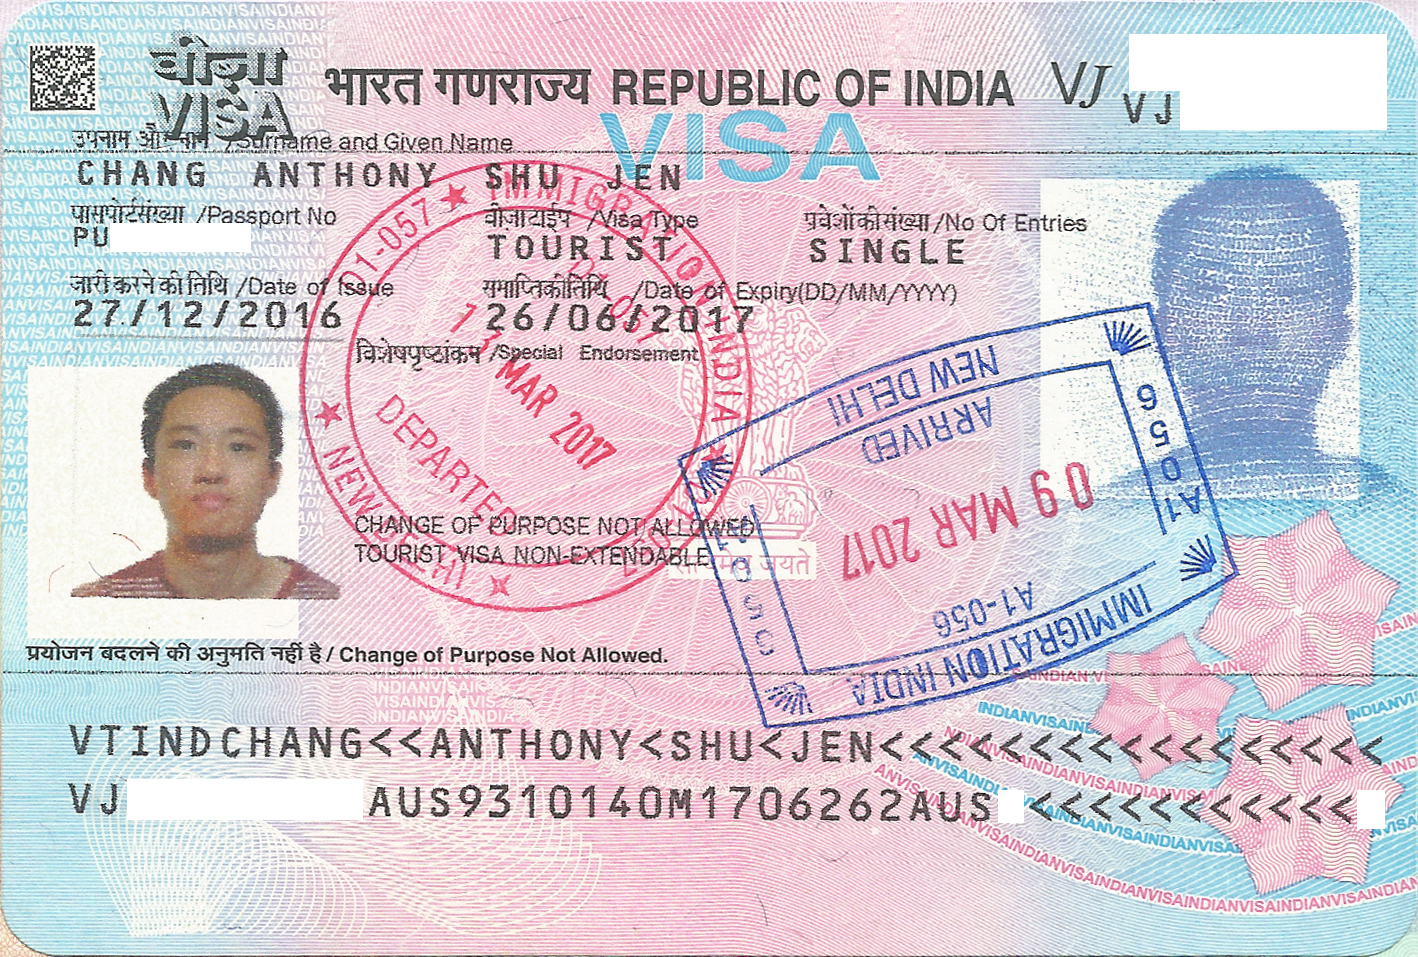 e tourist visa india 30 days